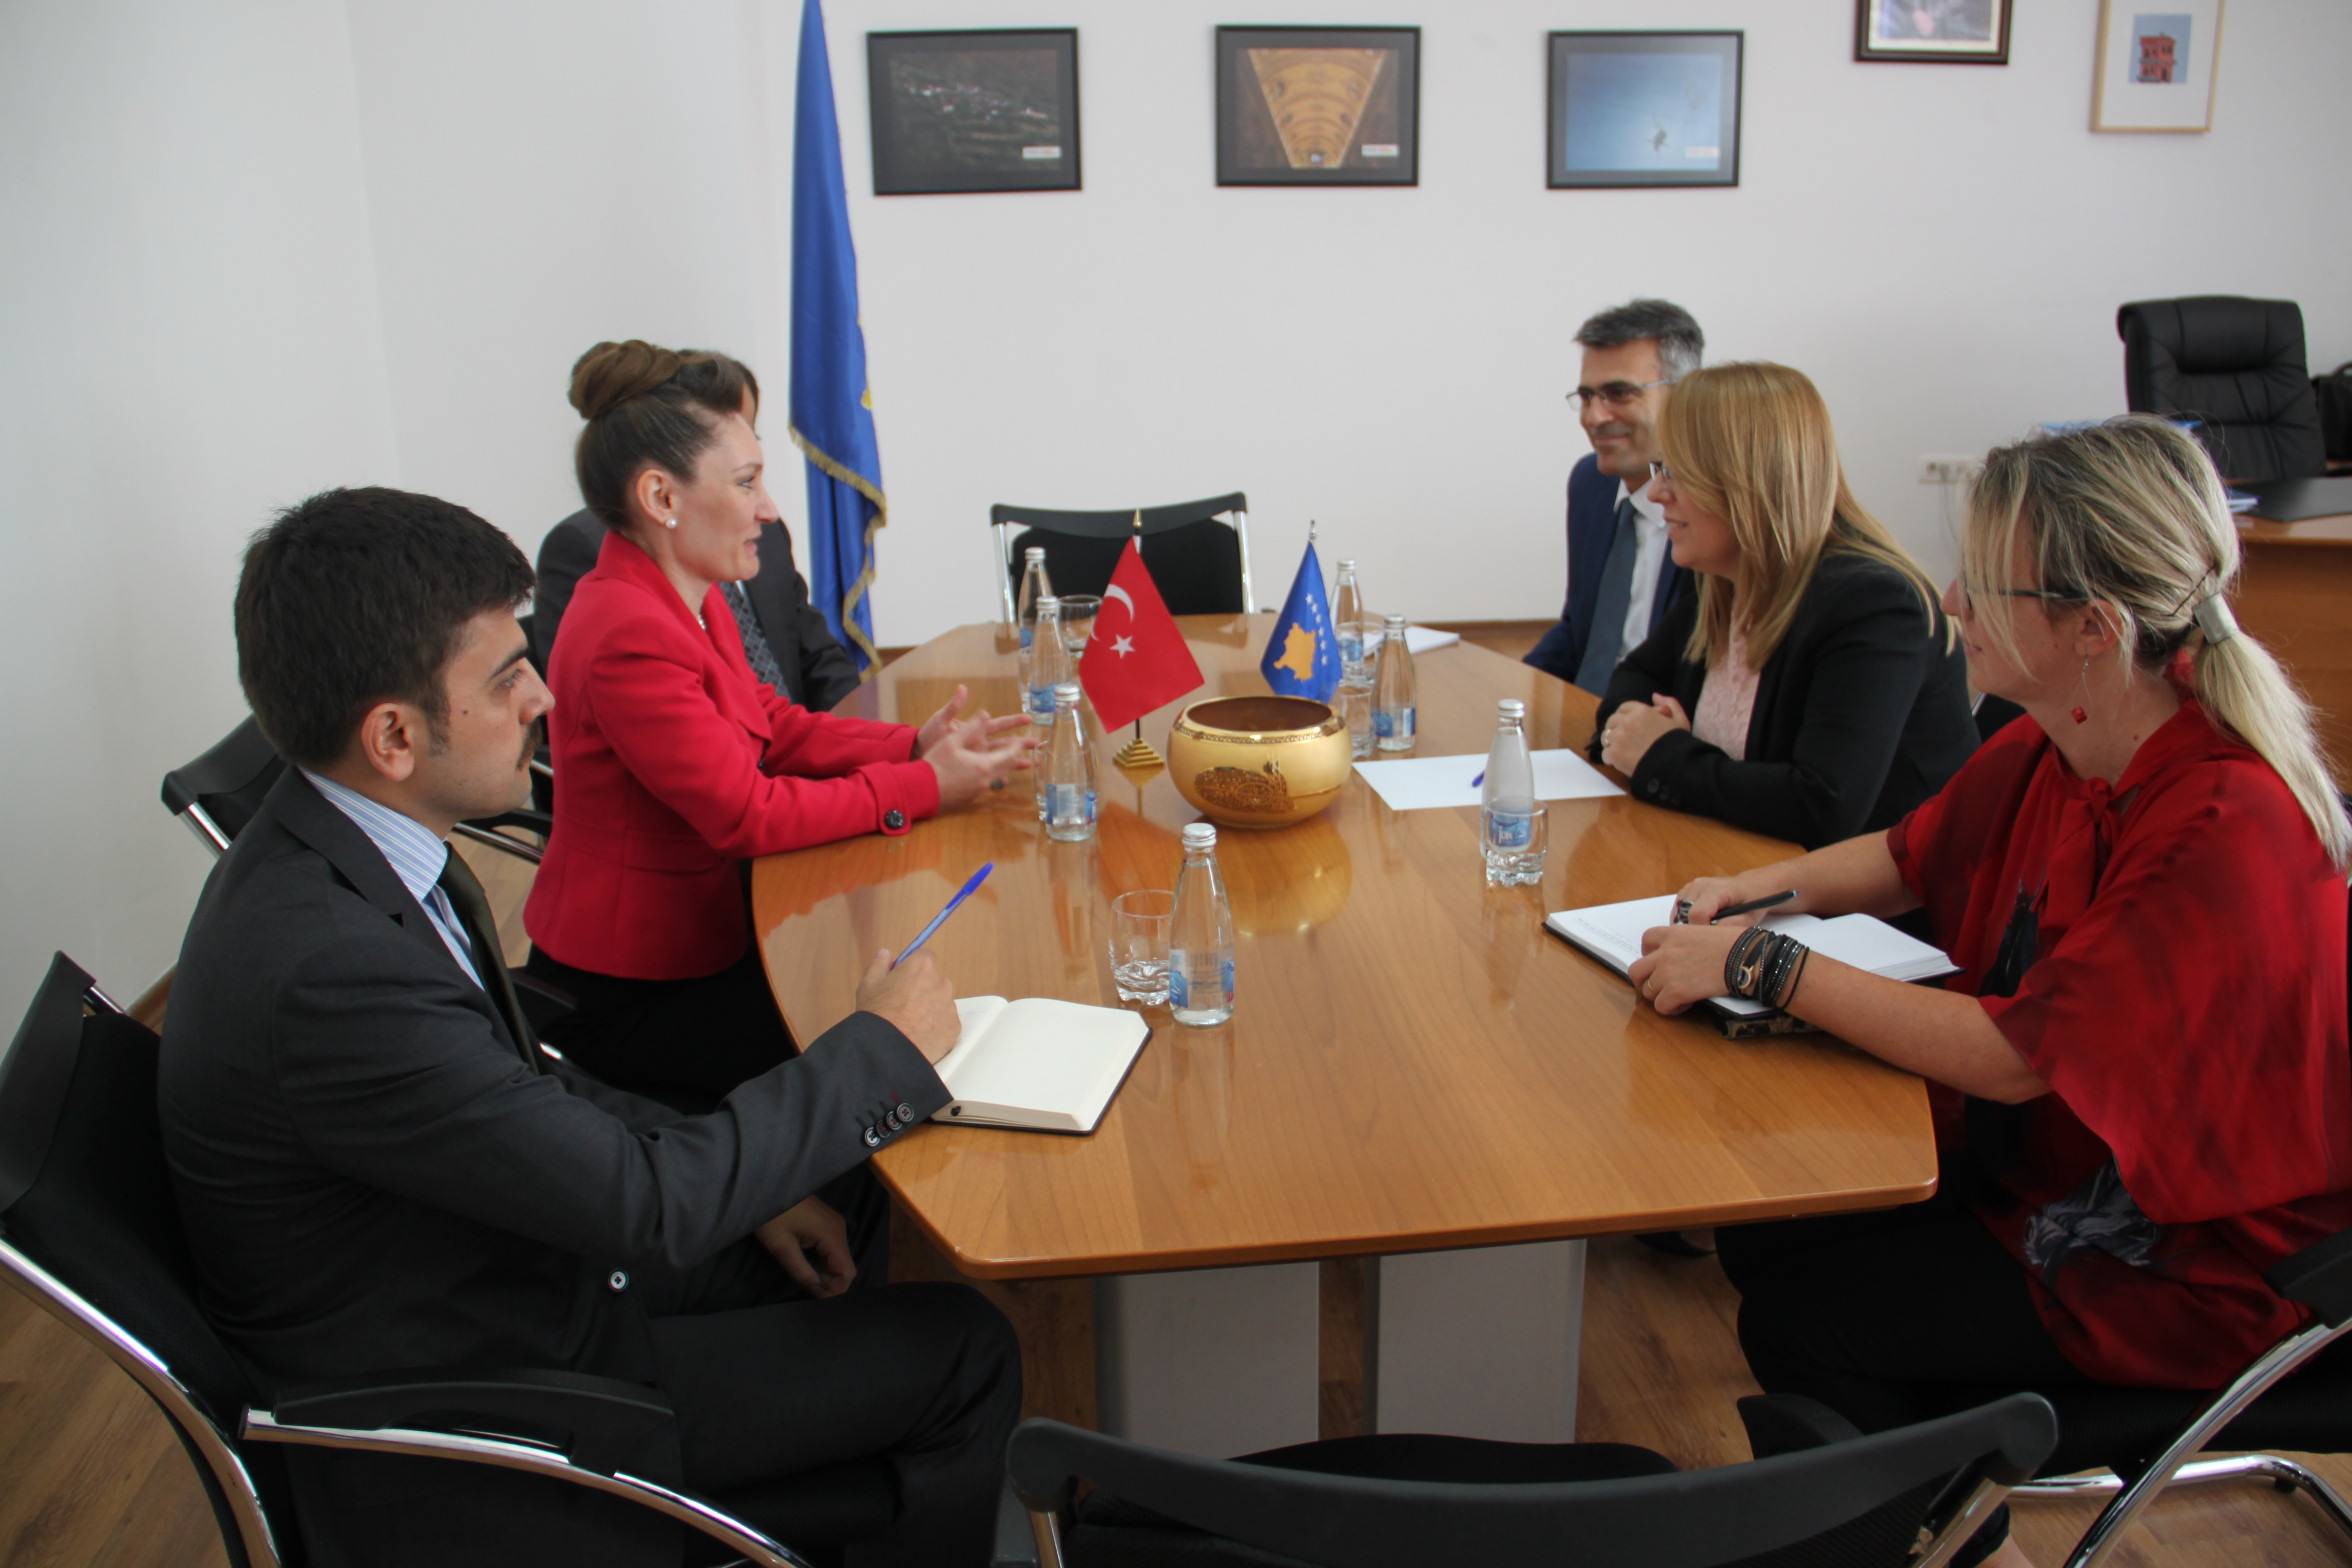 Ministrja Bajrami takoi ambasadoren turke Kivilcim Kiliç